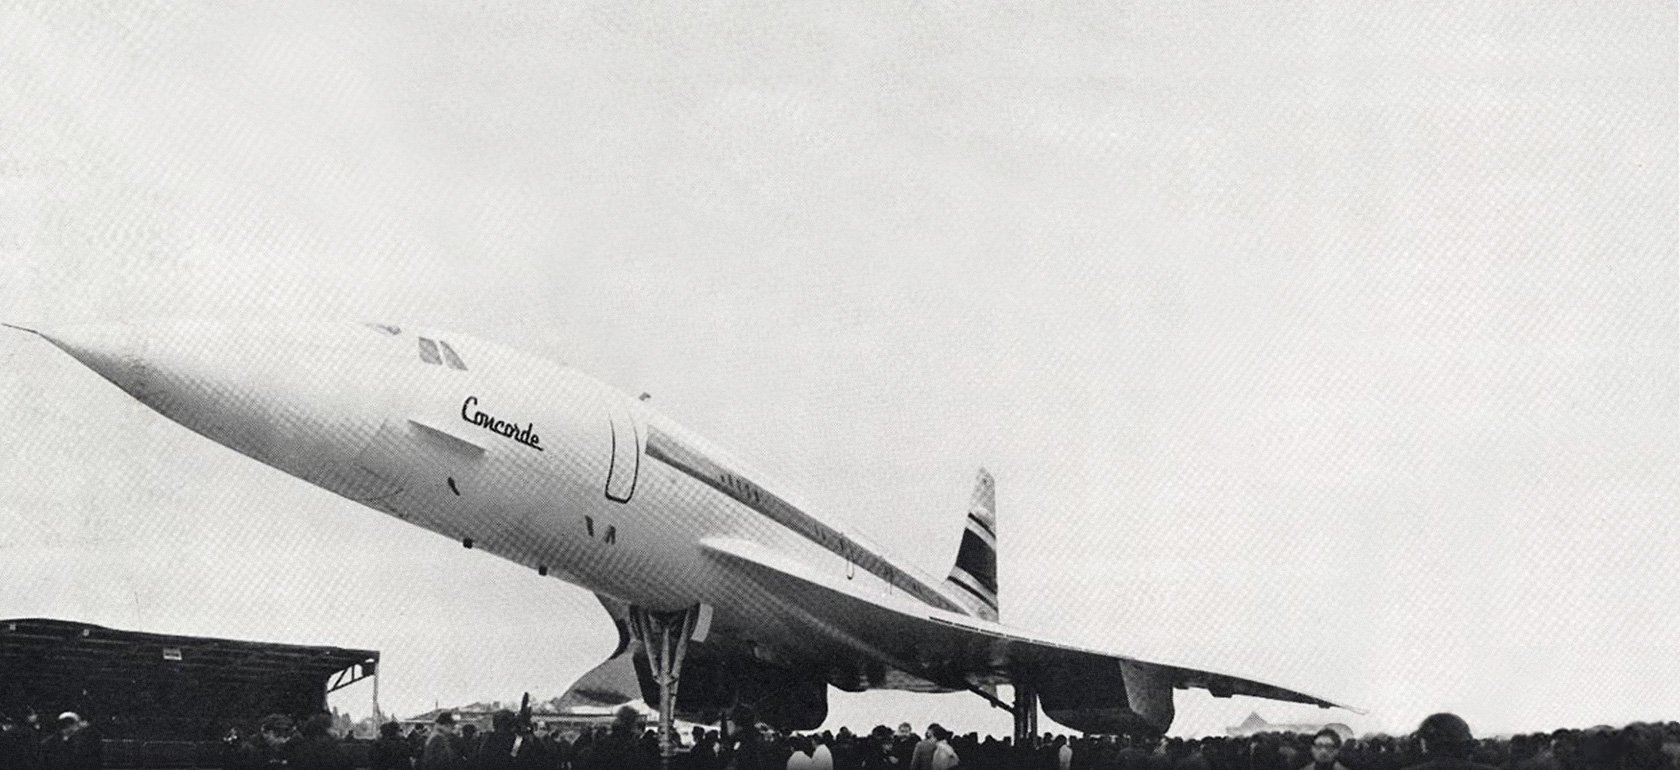 Concorde Rolex